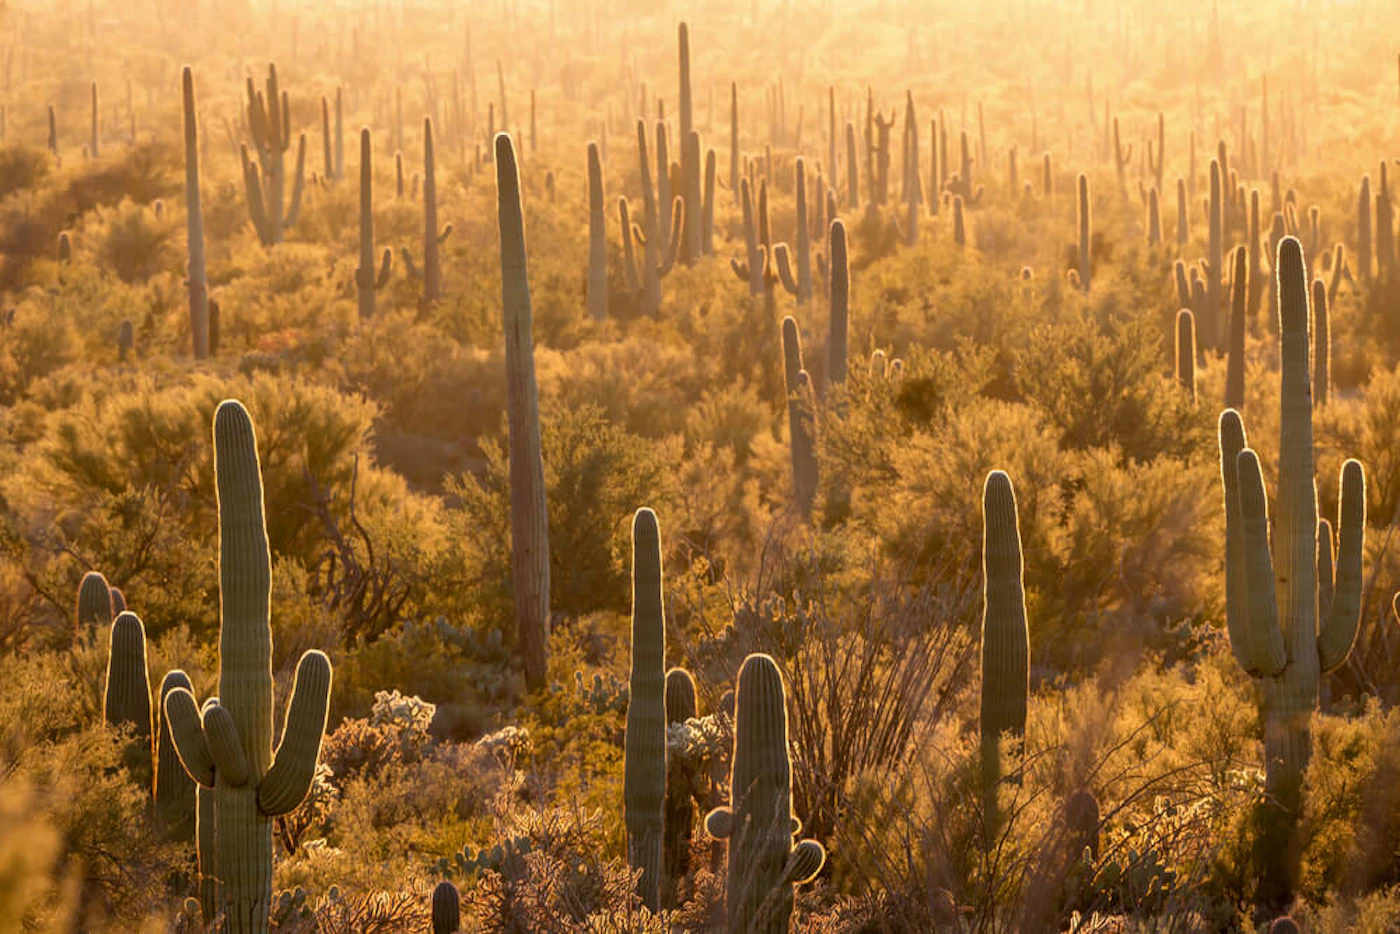 Cactus forest at sunset in Saguaro National Park
(Shutterstock Photo/kojihirano)